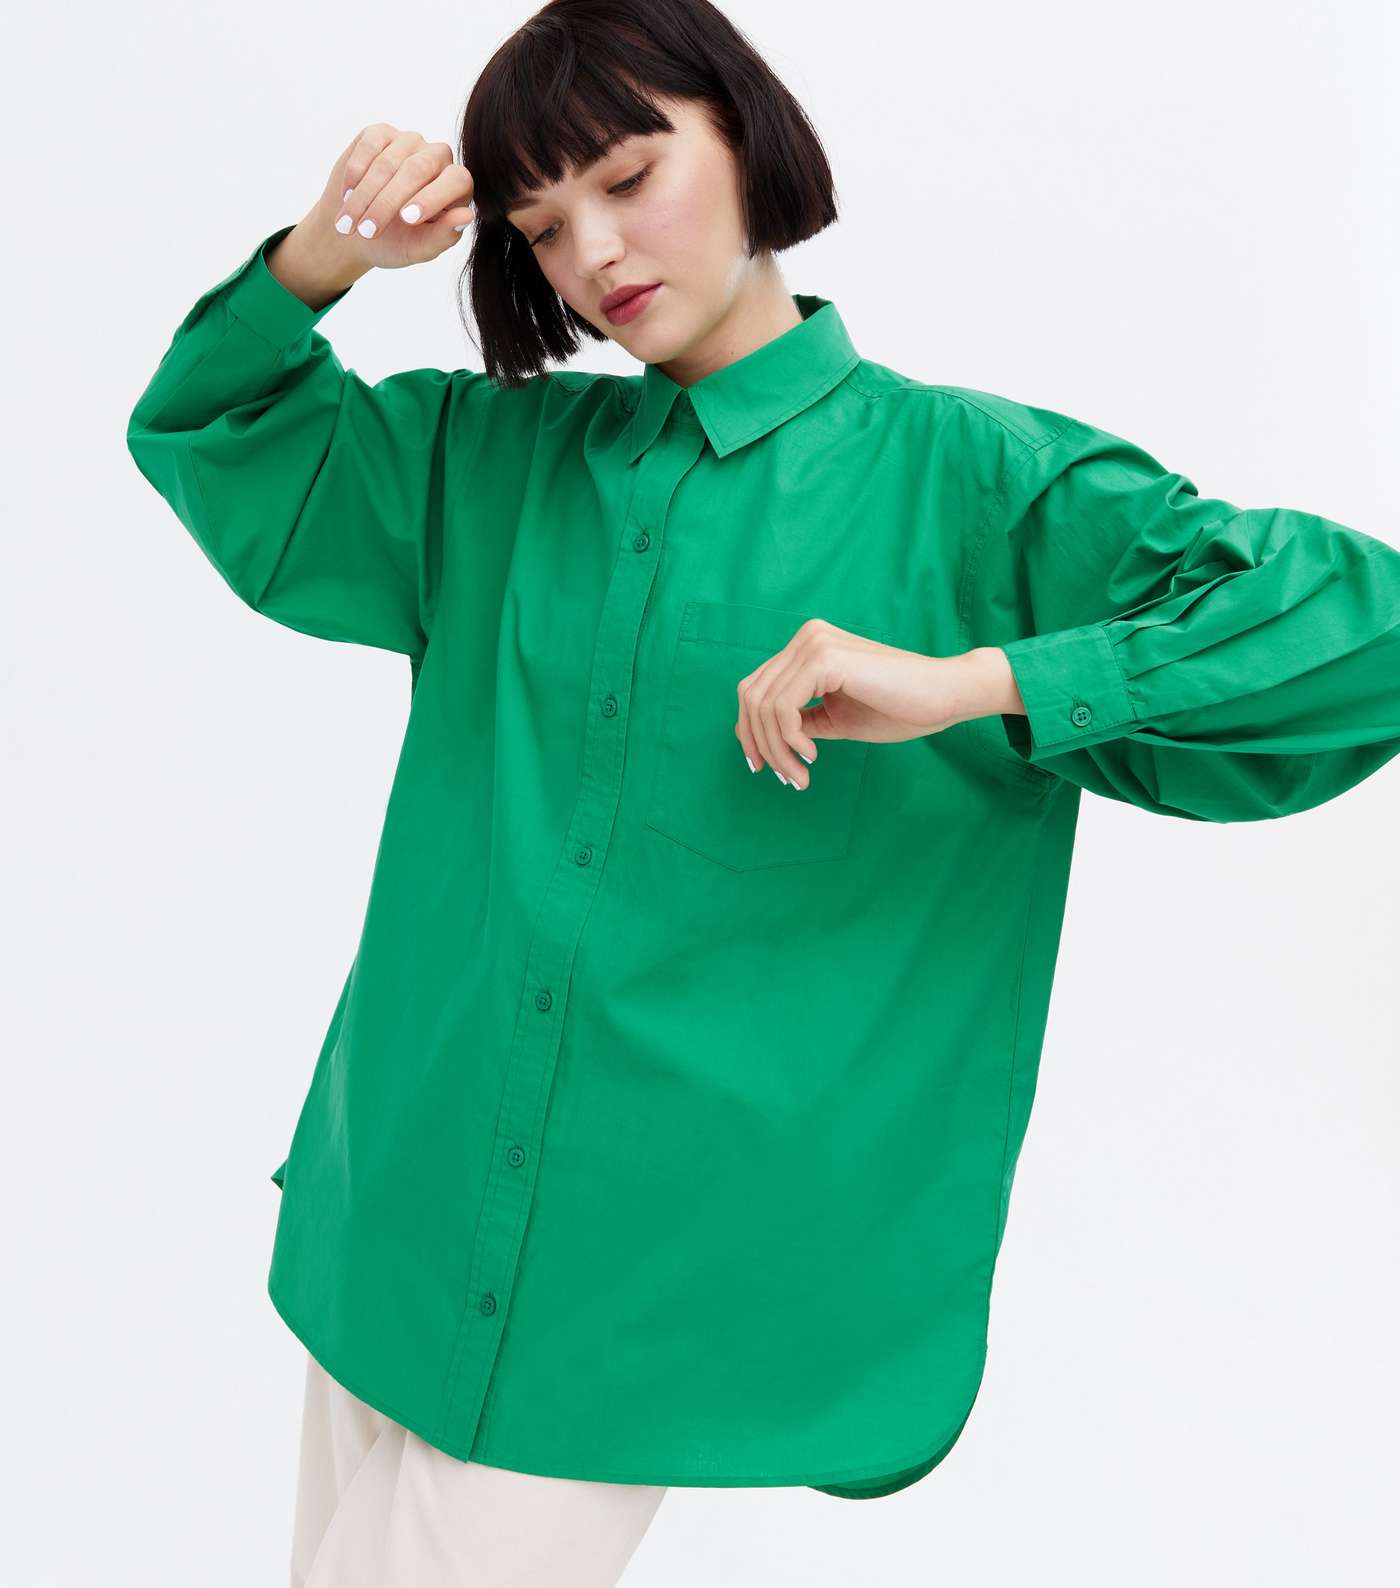 Green Poplin Long Sleeve Oversized Shirt